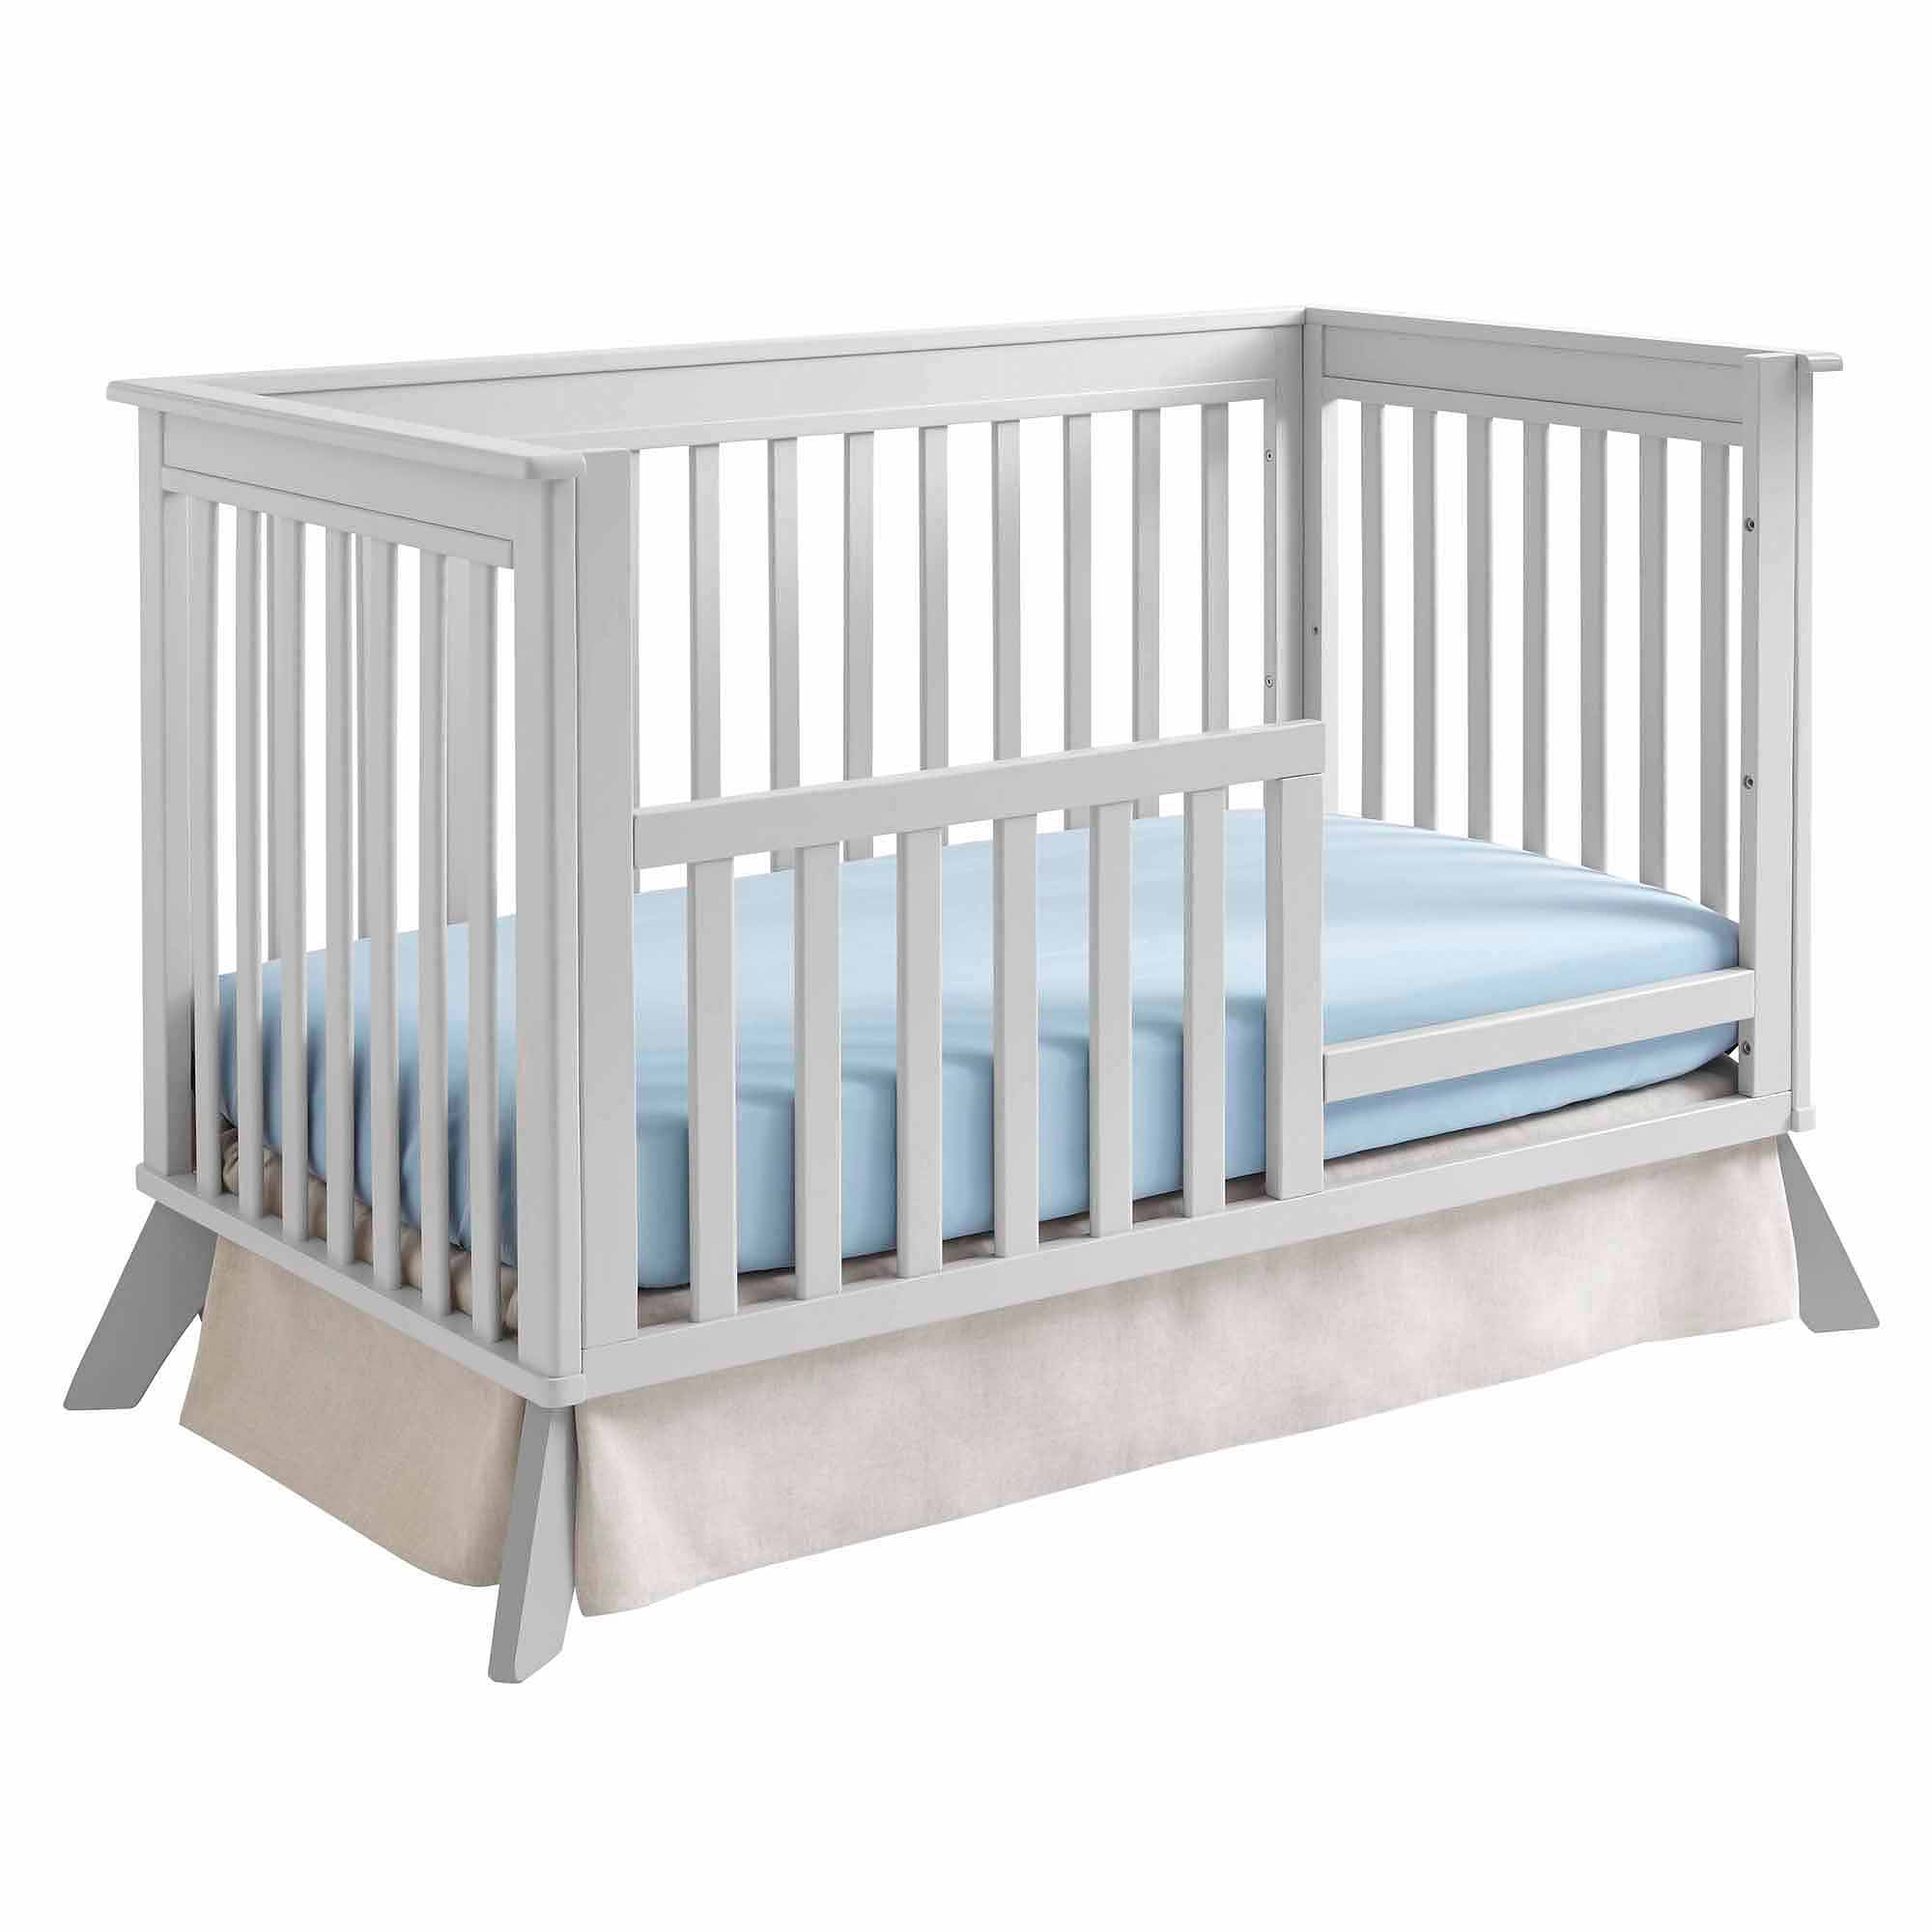 summer infant crib conversion kit